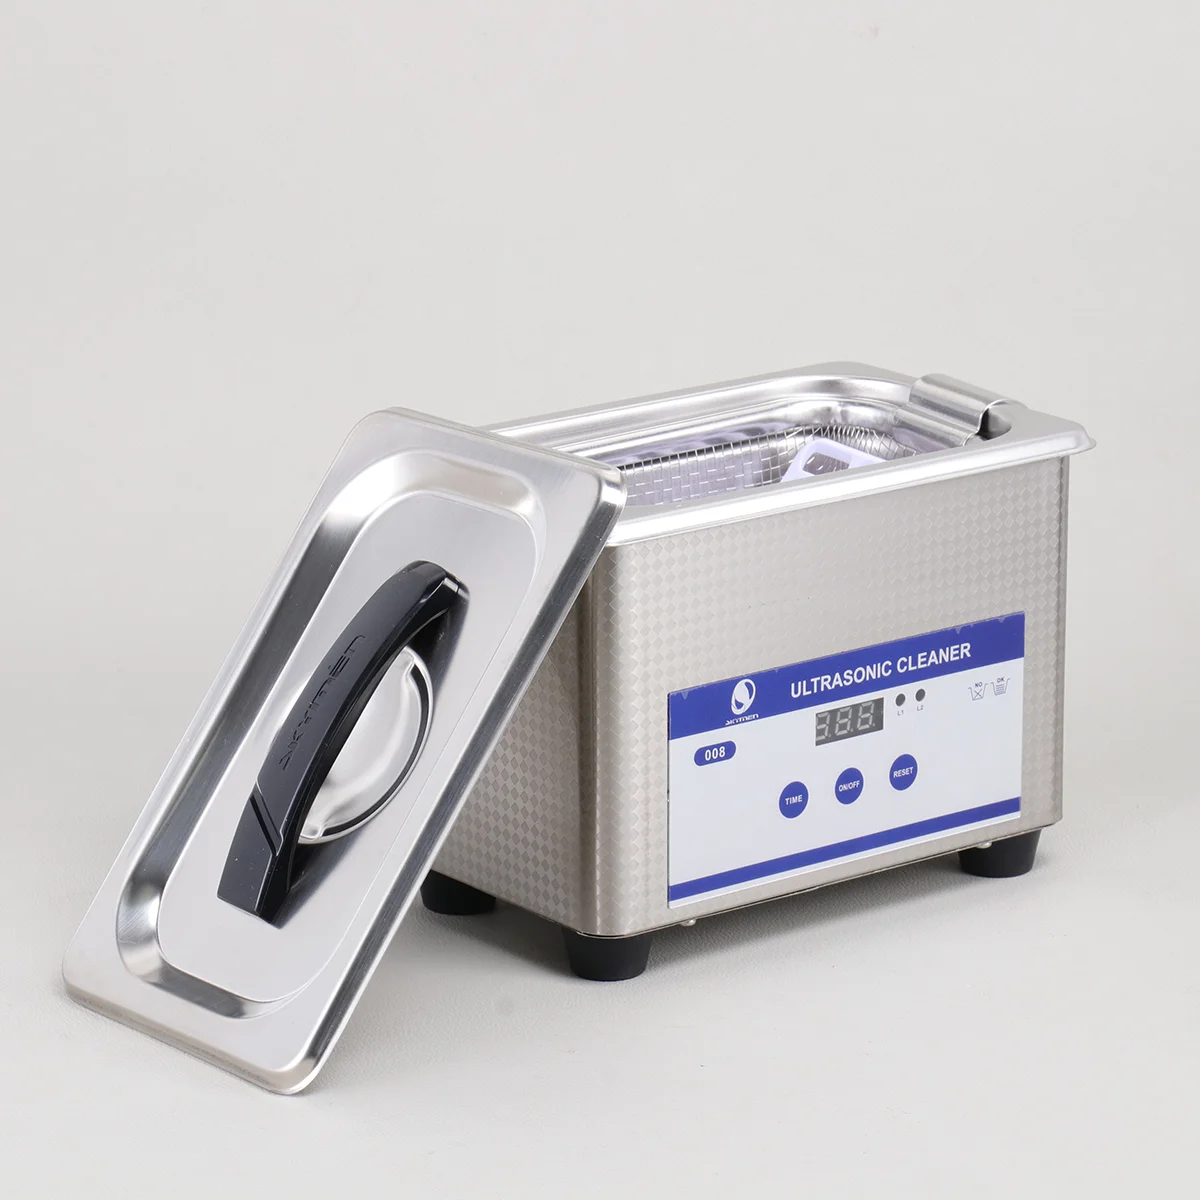 

800ml 35W JP-008 Digital Cleaner Heated Timer Stainless Steel Ultra Sonic Cleaning Machine Washing Machine (EU Plug)